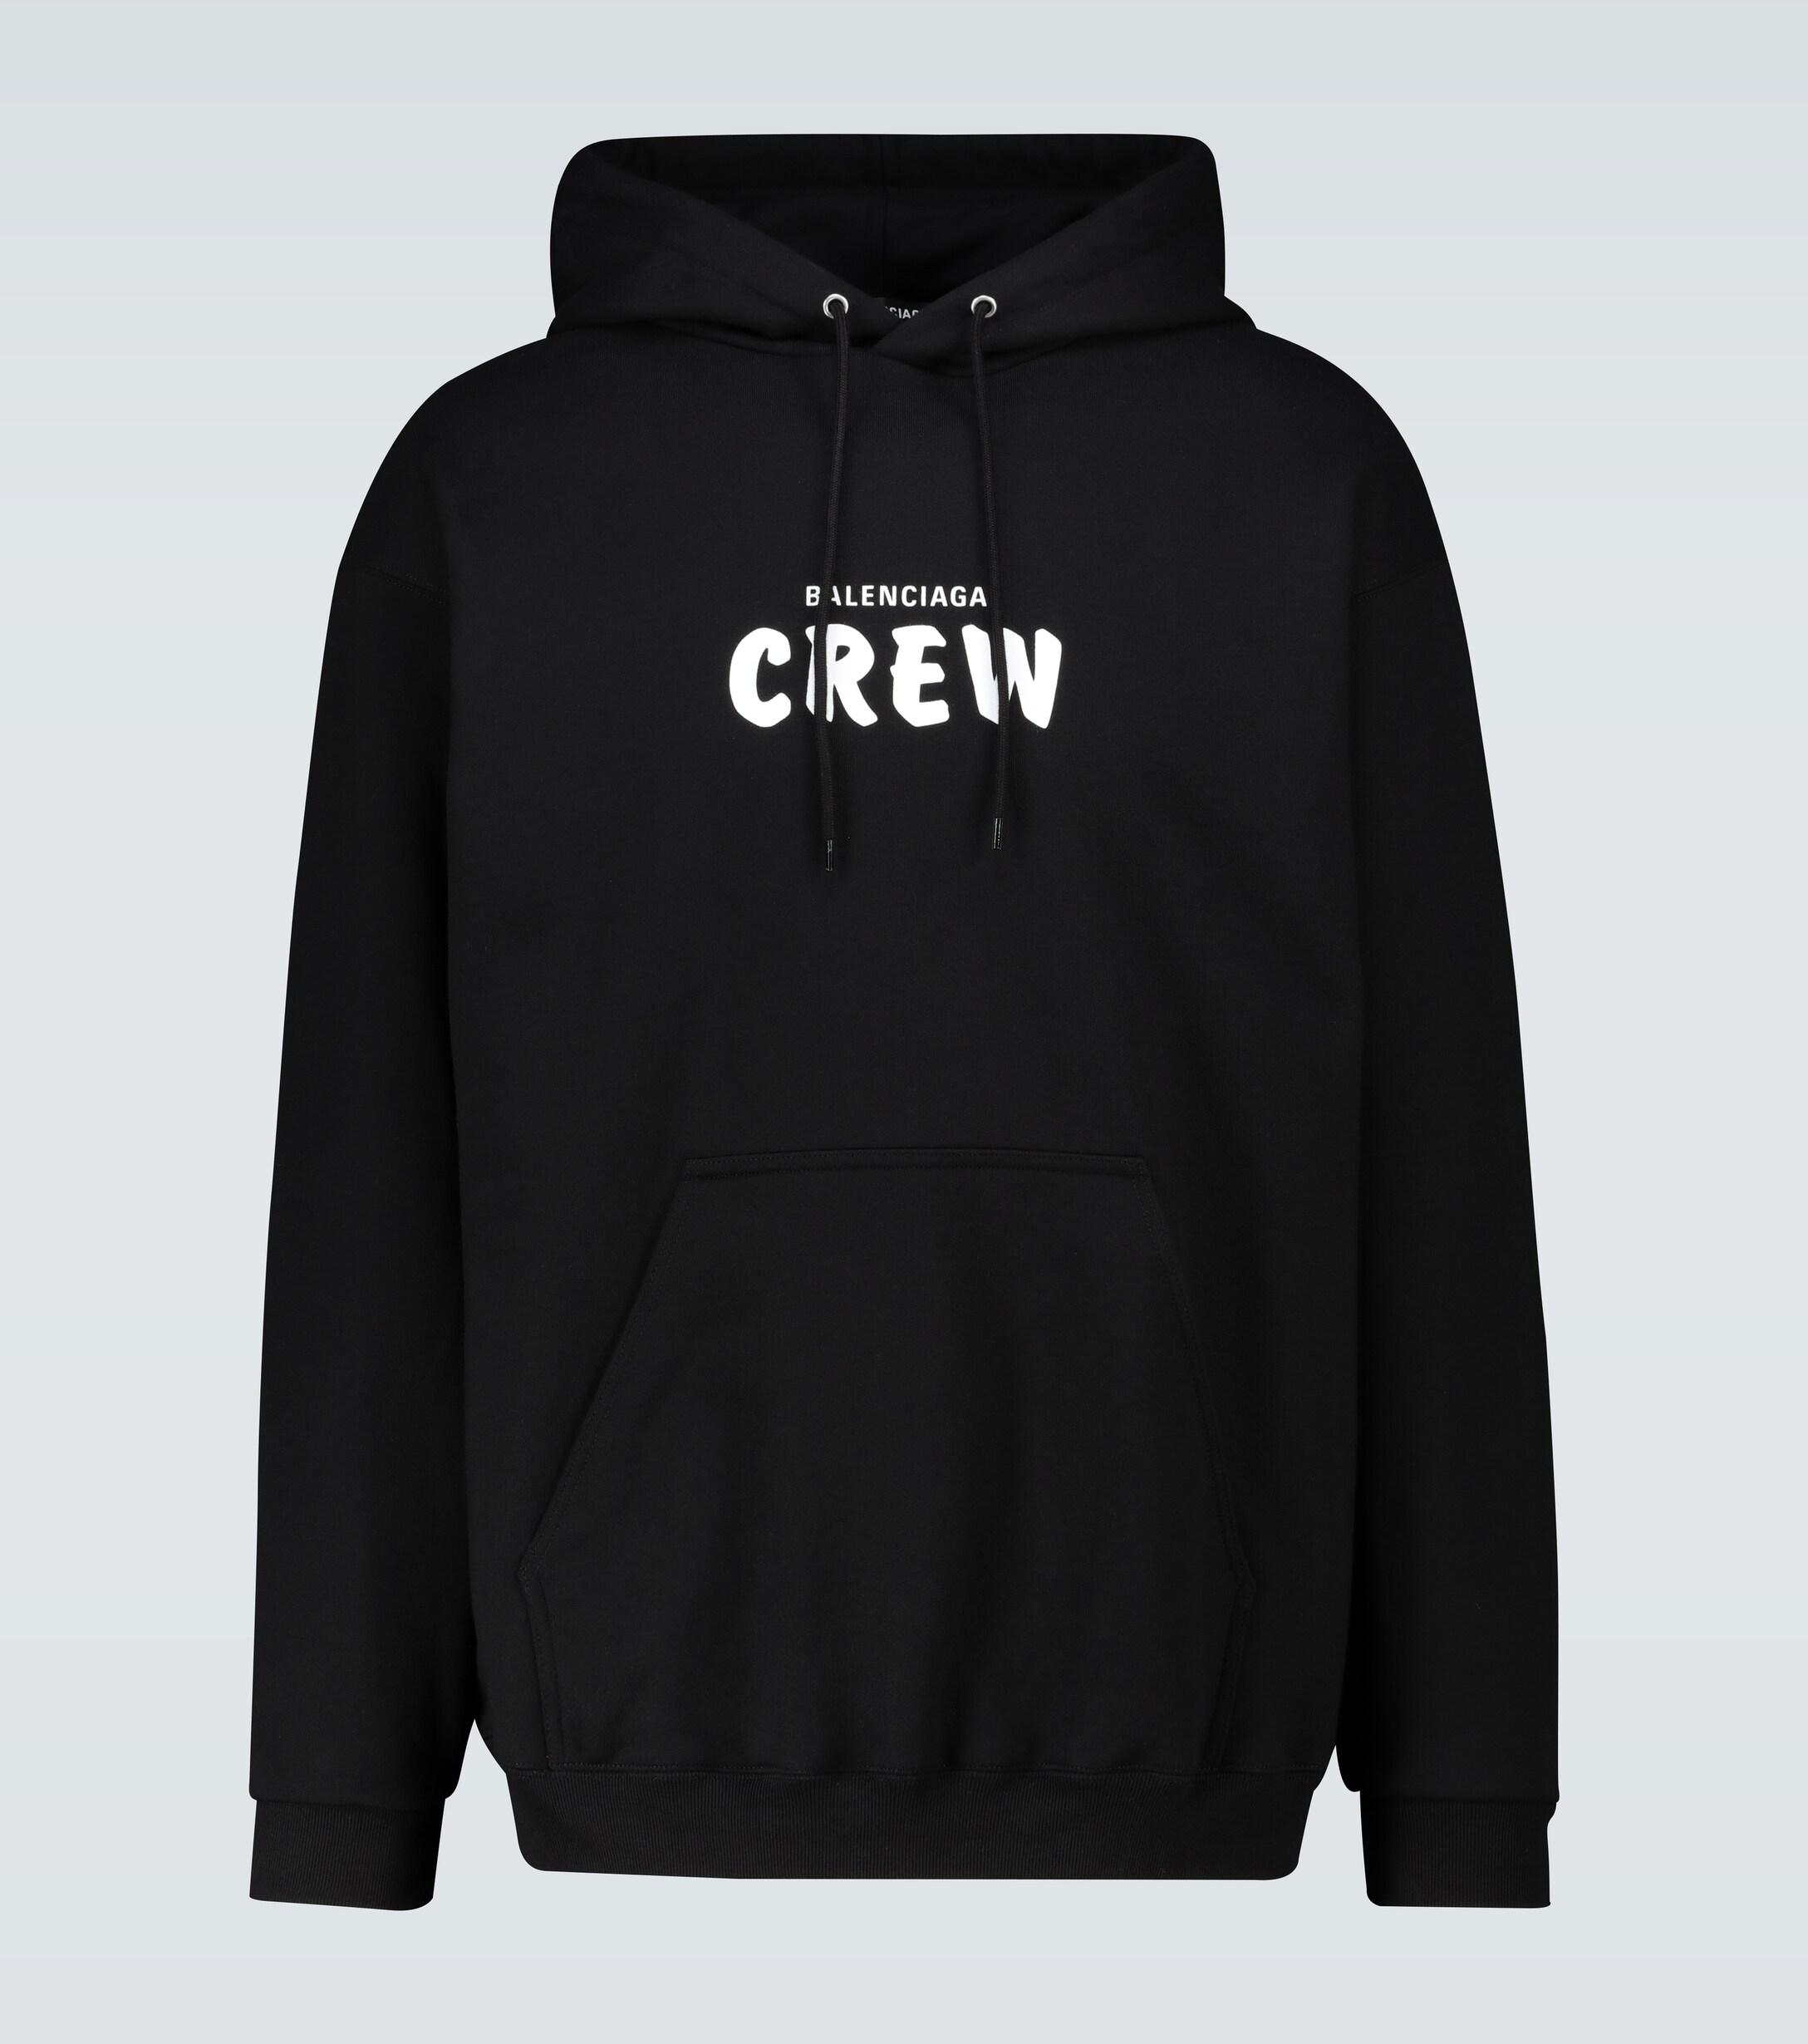 Balenciaga Crew Medium-fit Hooded Sweatshirt in Black for Men - Lyst